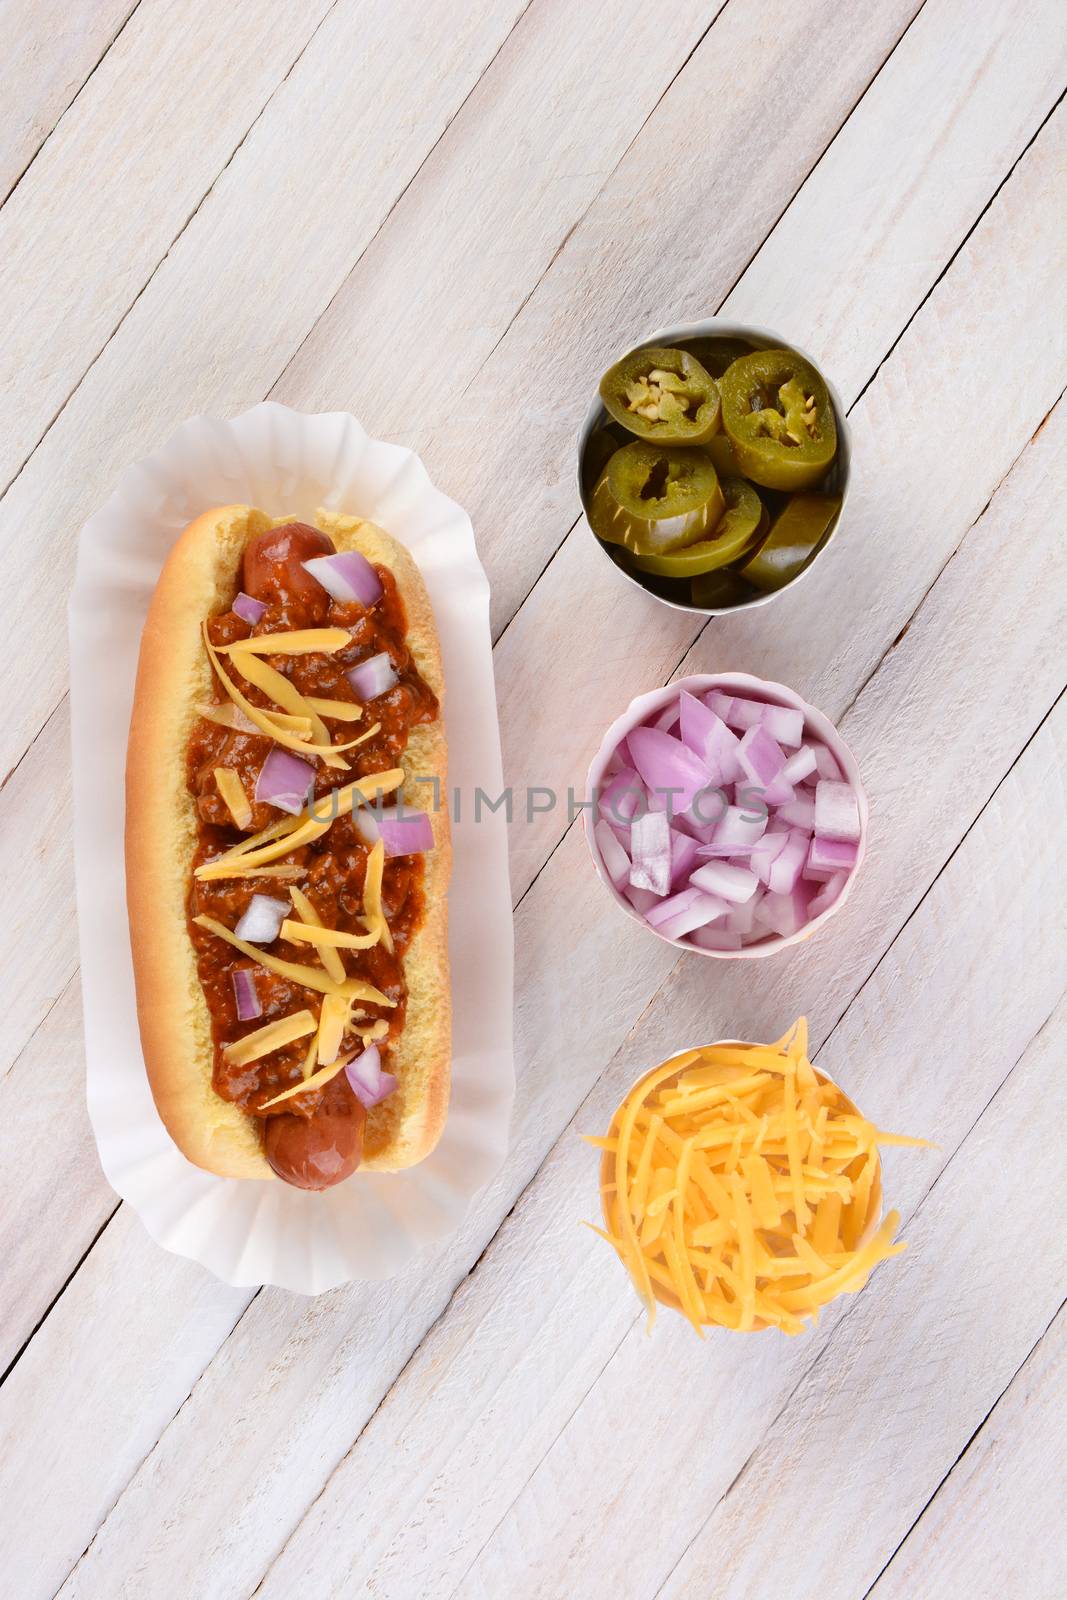 Chili Hot Dog by sCukrov